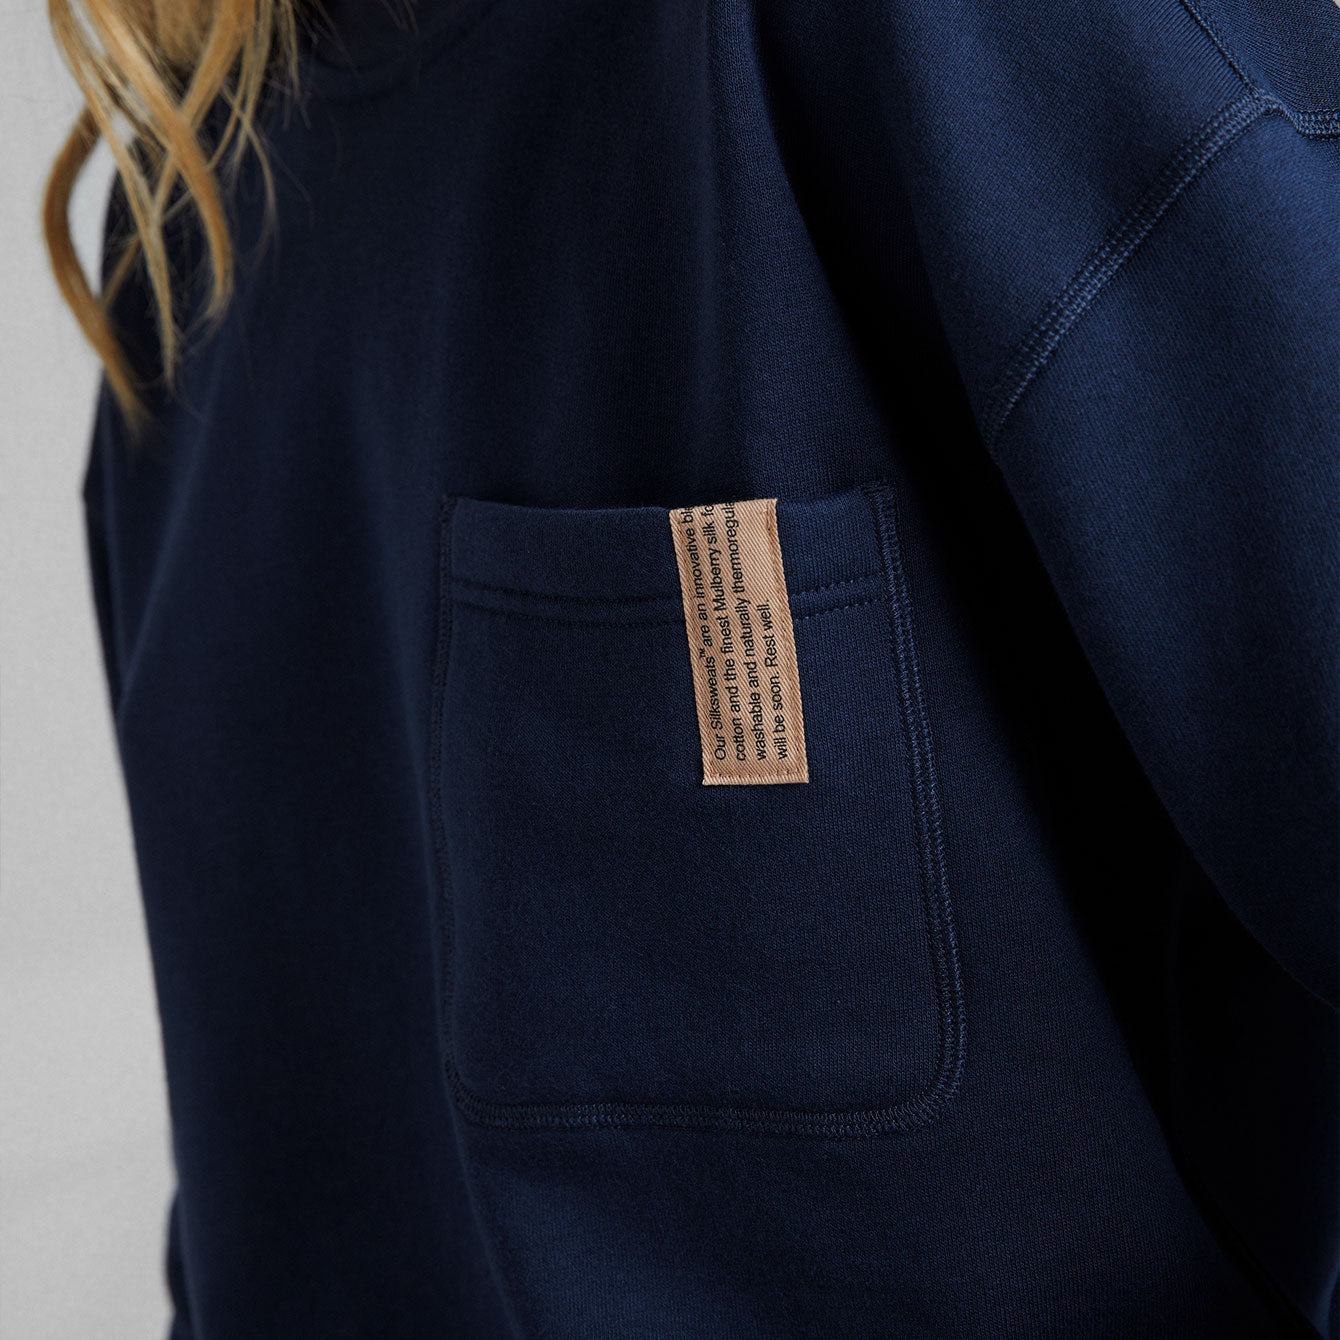 Silksweats Reversible Pocket Sweatshirt - #Deep Blue